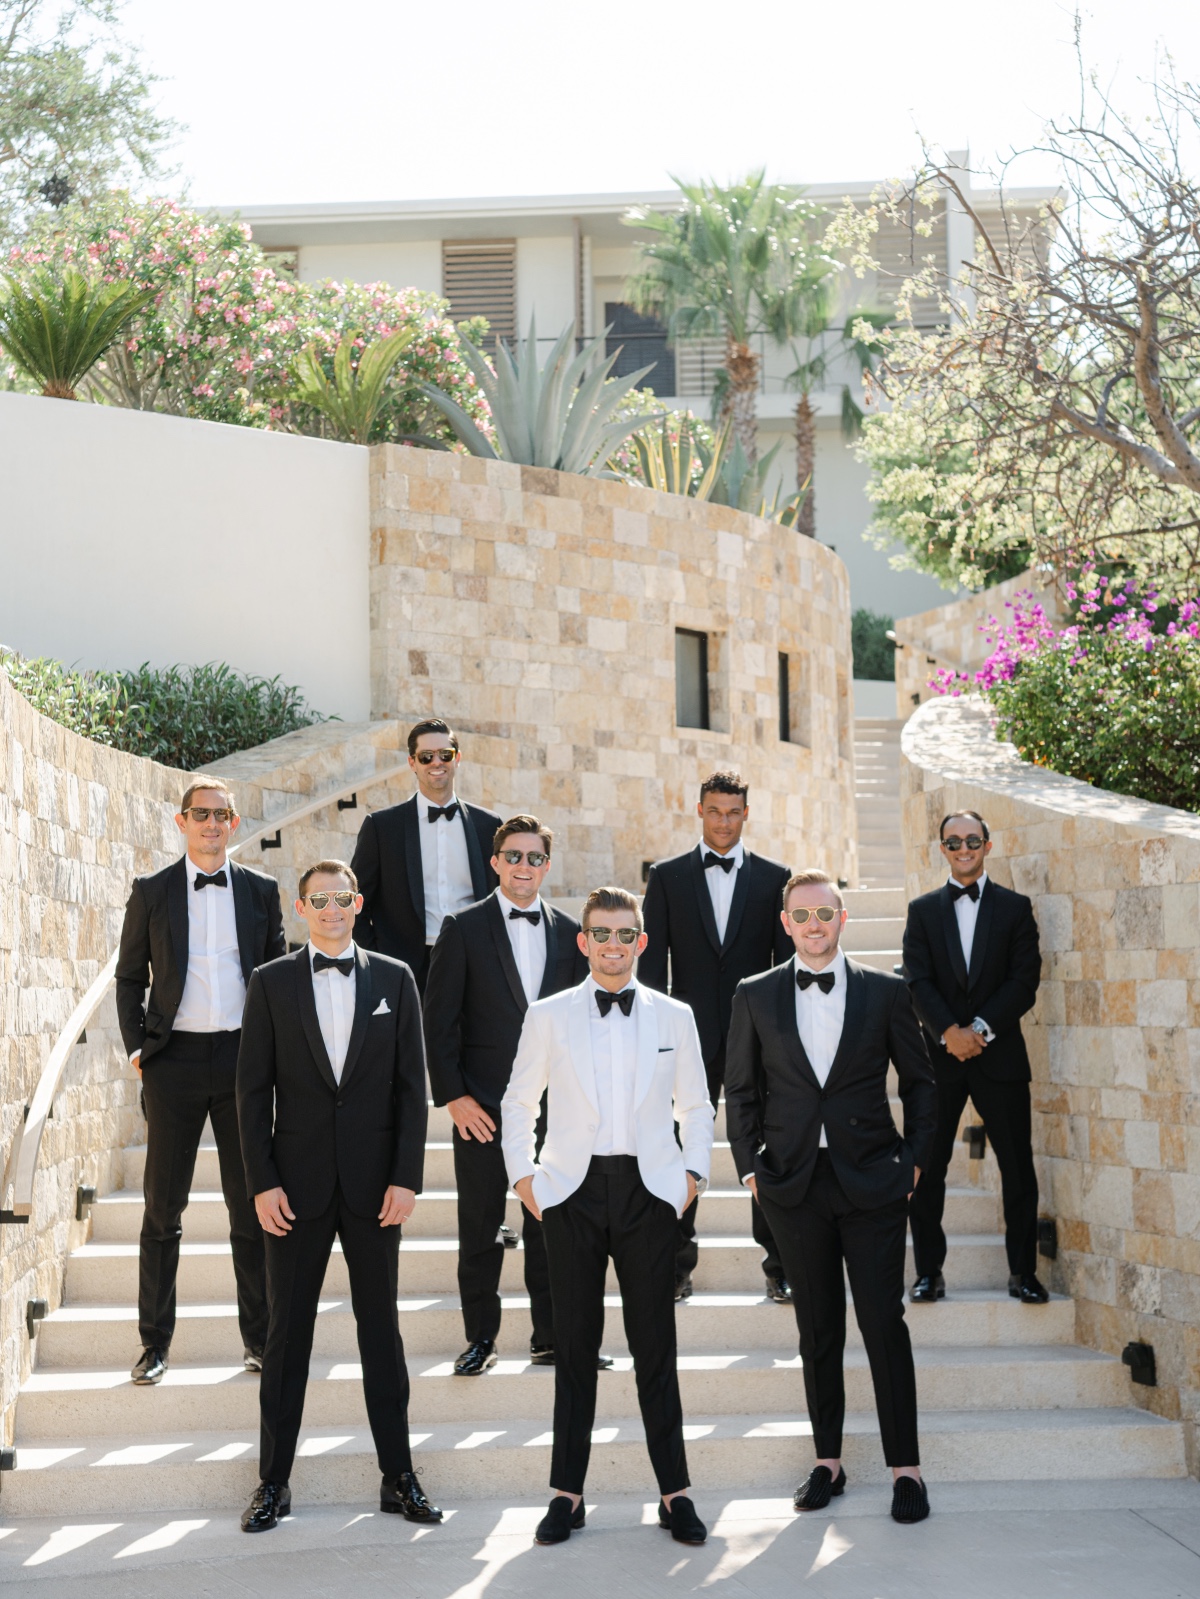 Groom in white suit jacket on steps with groomsmen in black suit jackets